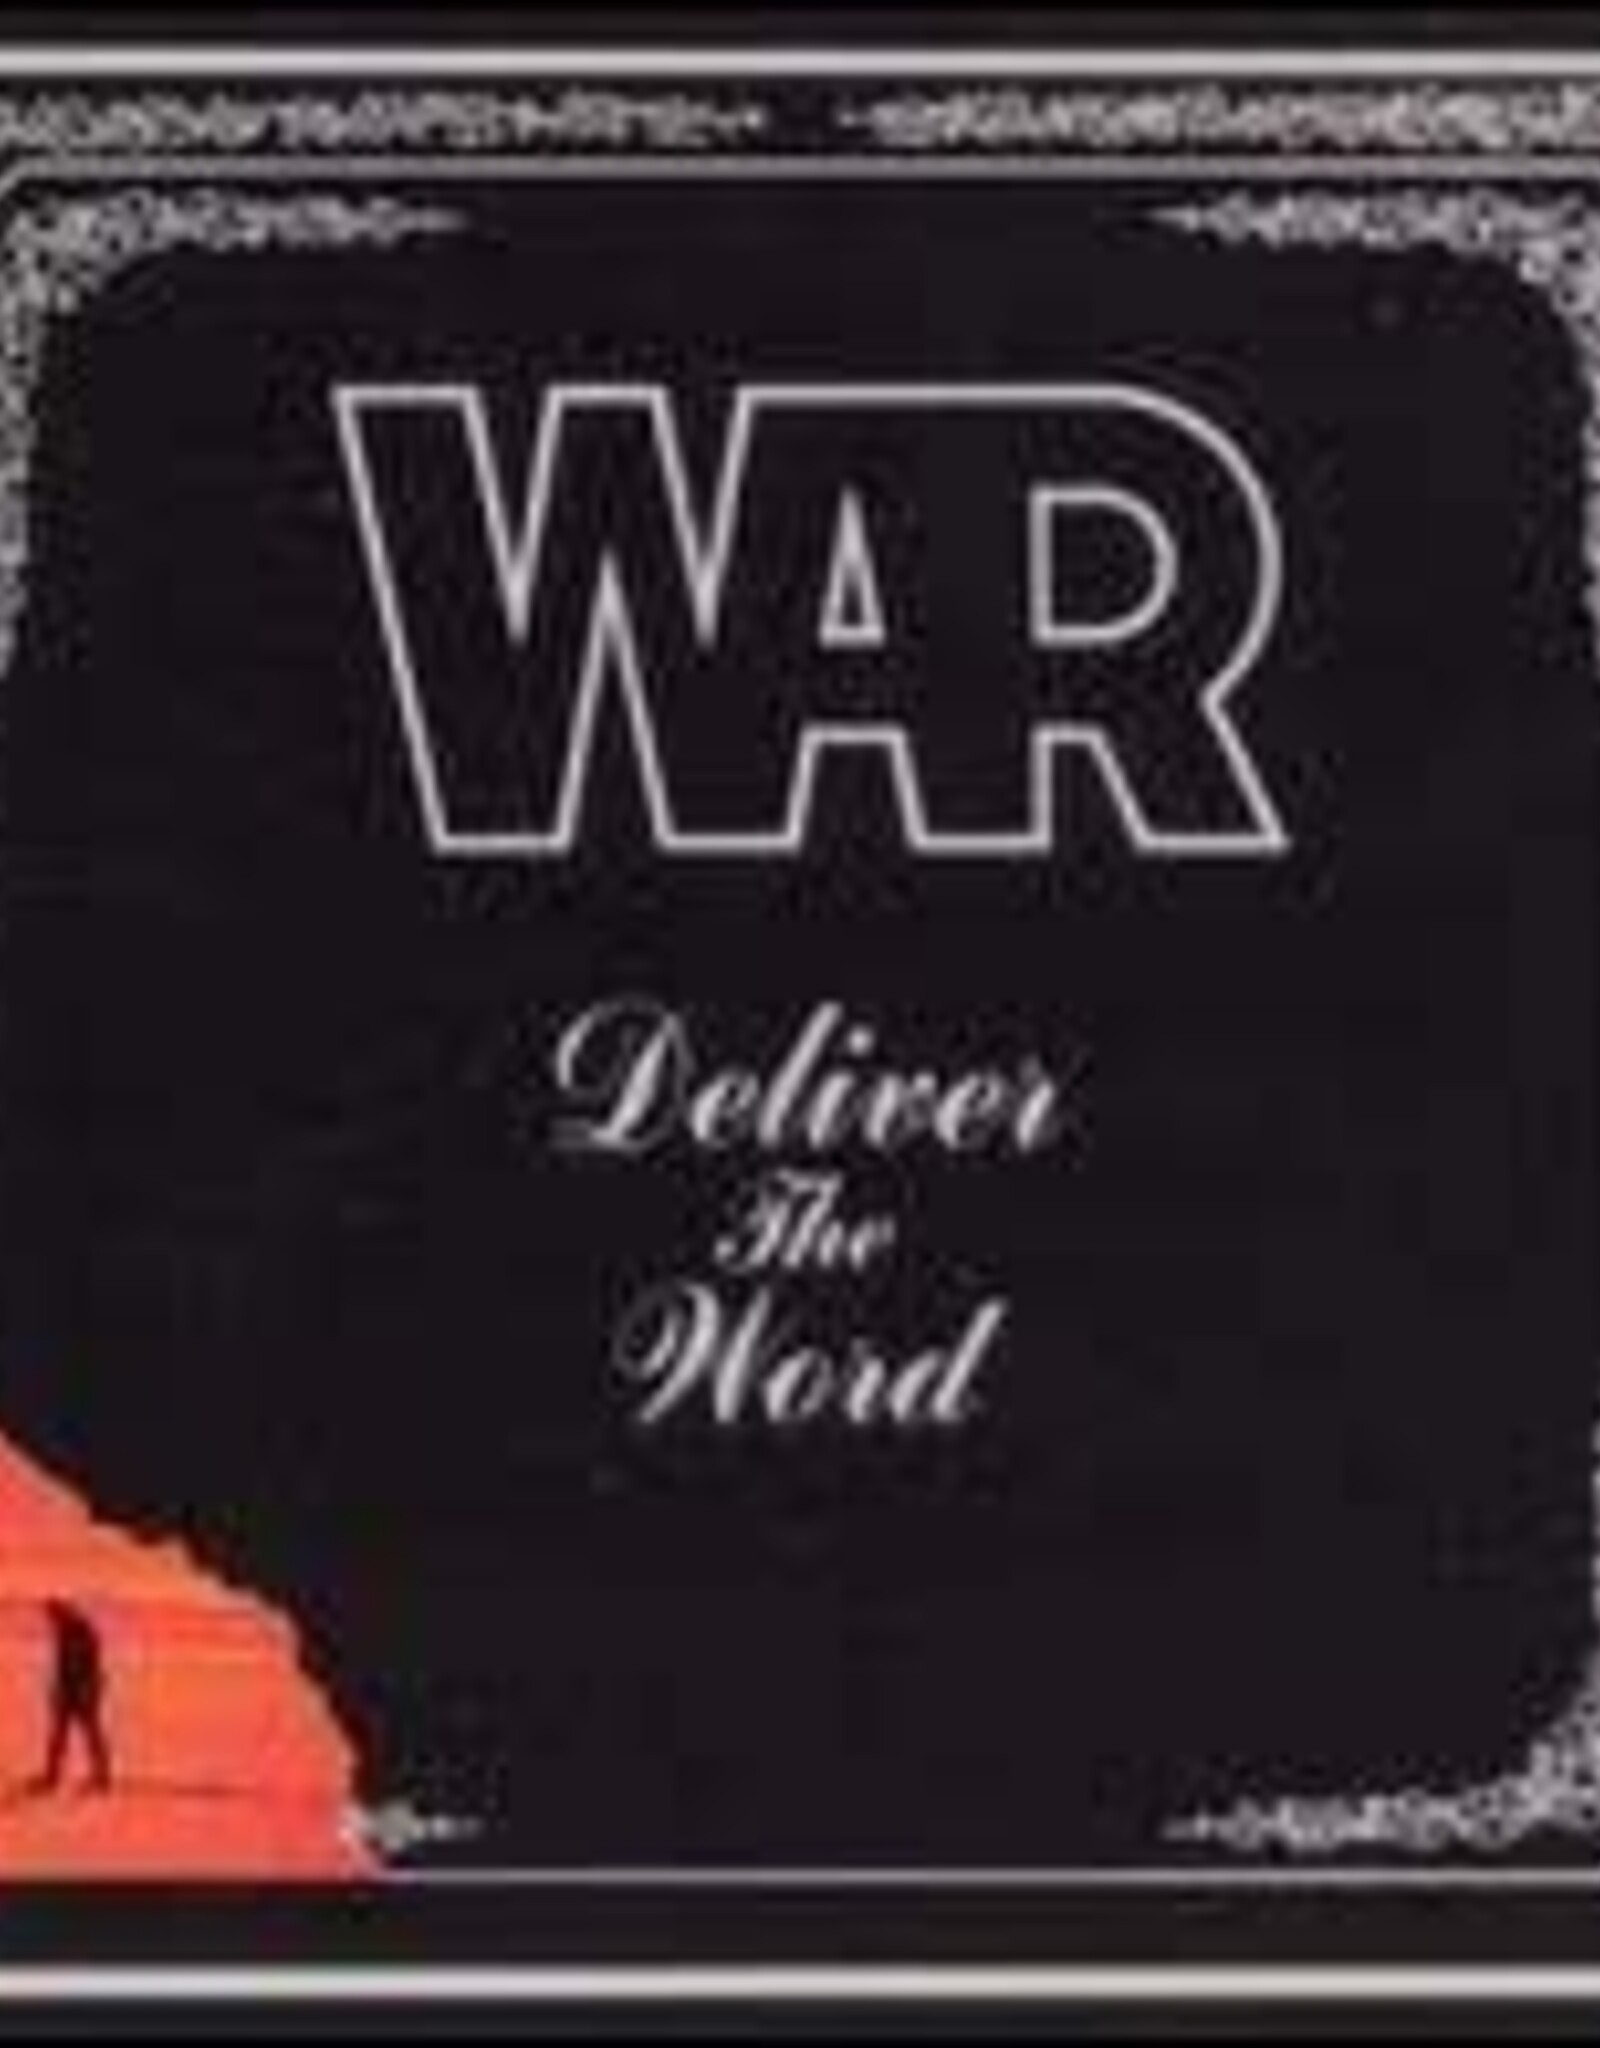 War - Deliver The World